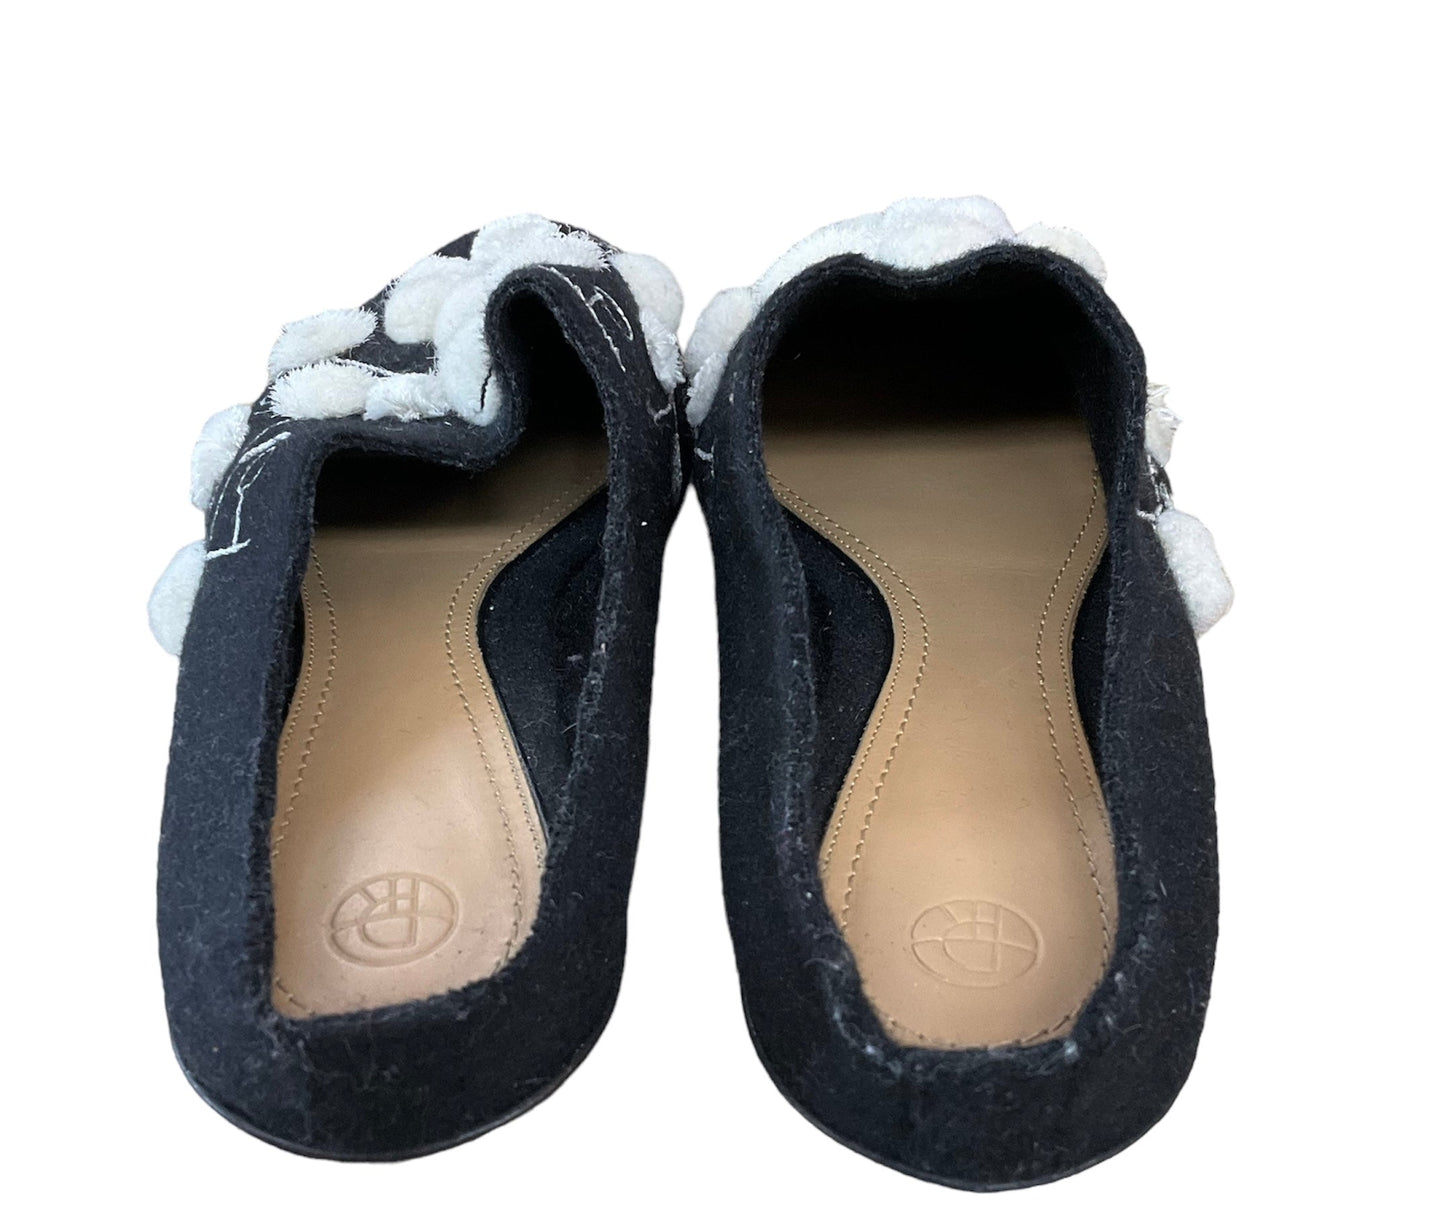 Black Shoes Flats Cmb, Size 8